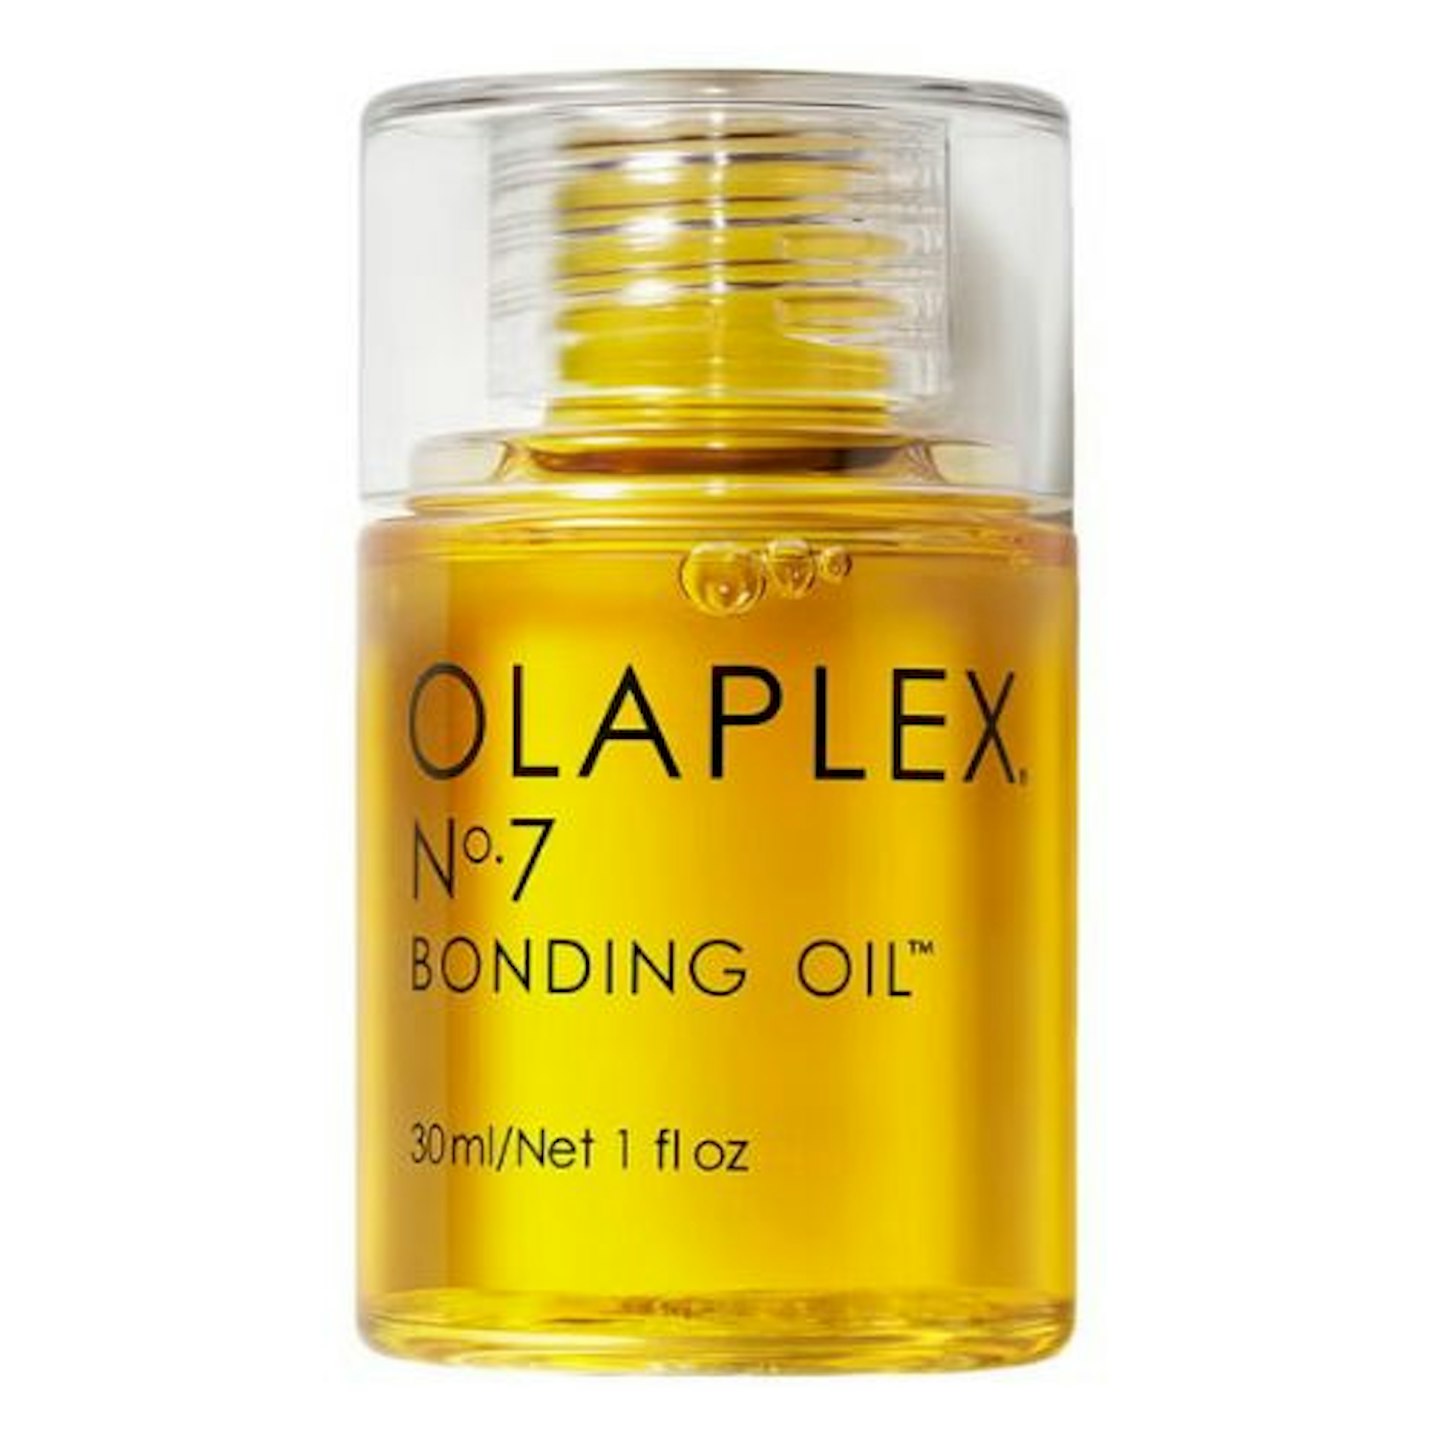 Olaplex No.7 Bonding Oil